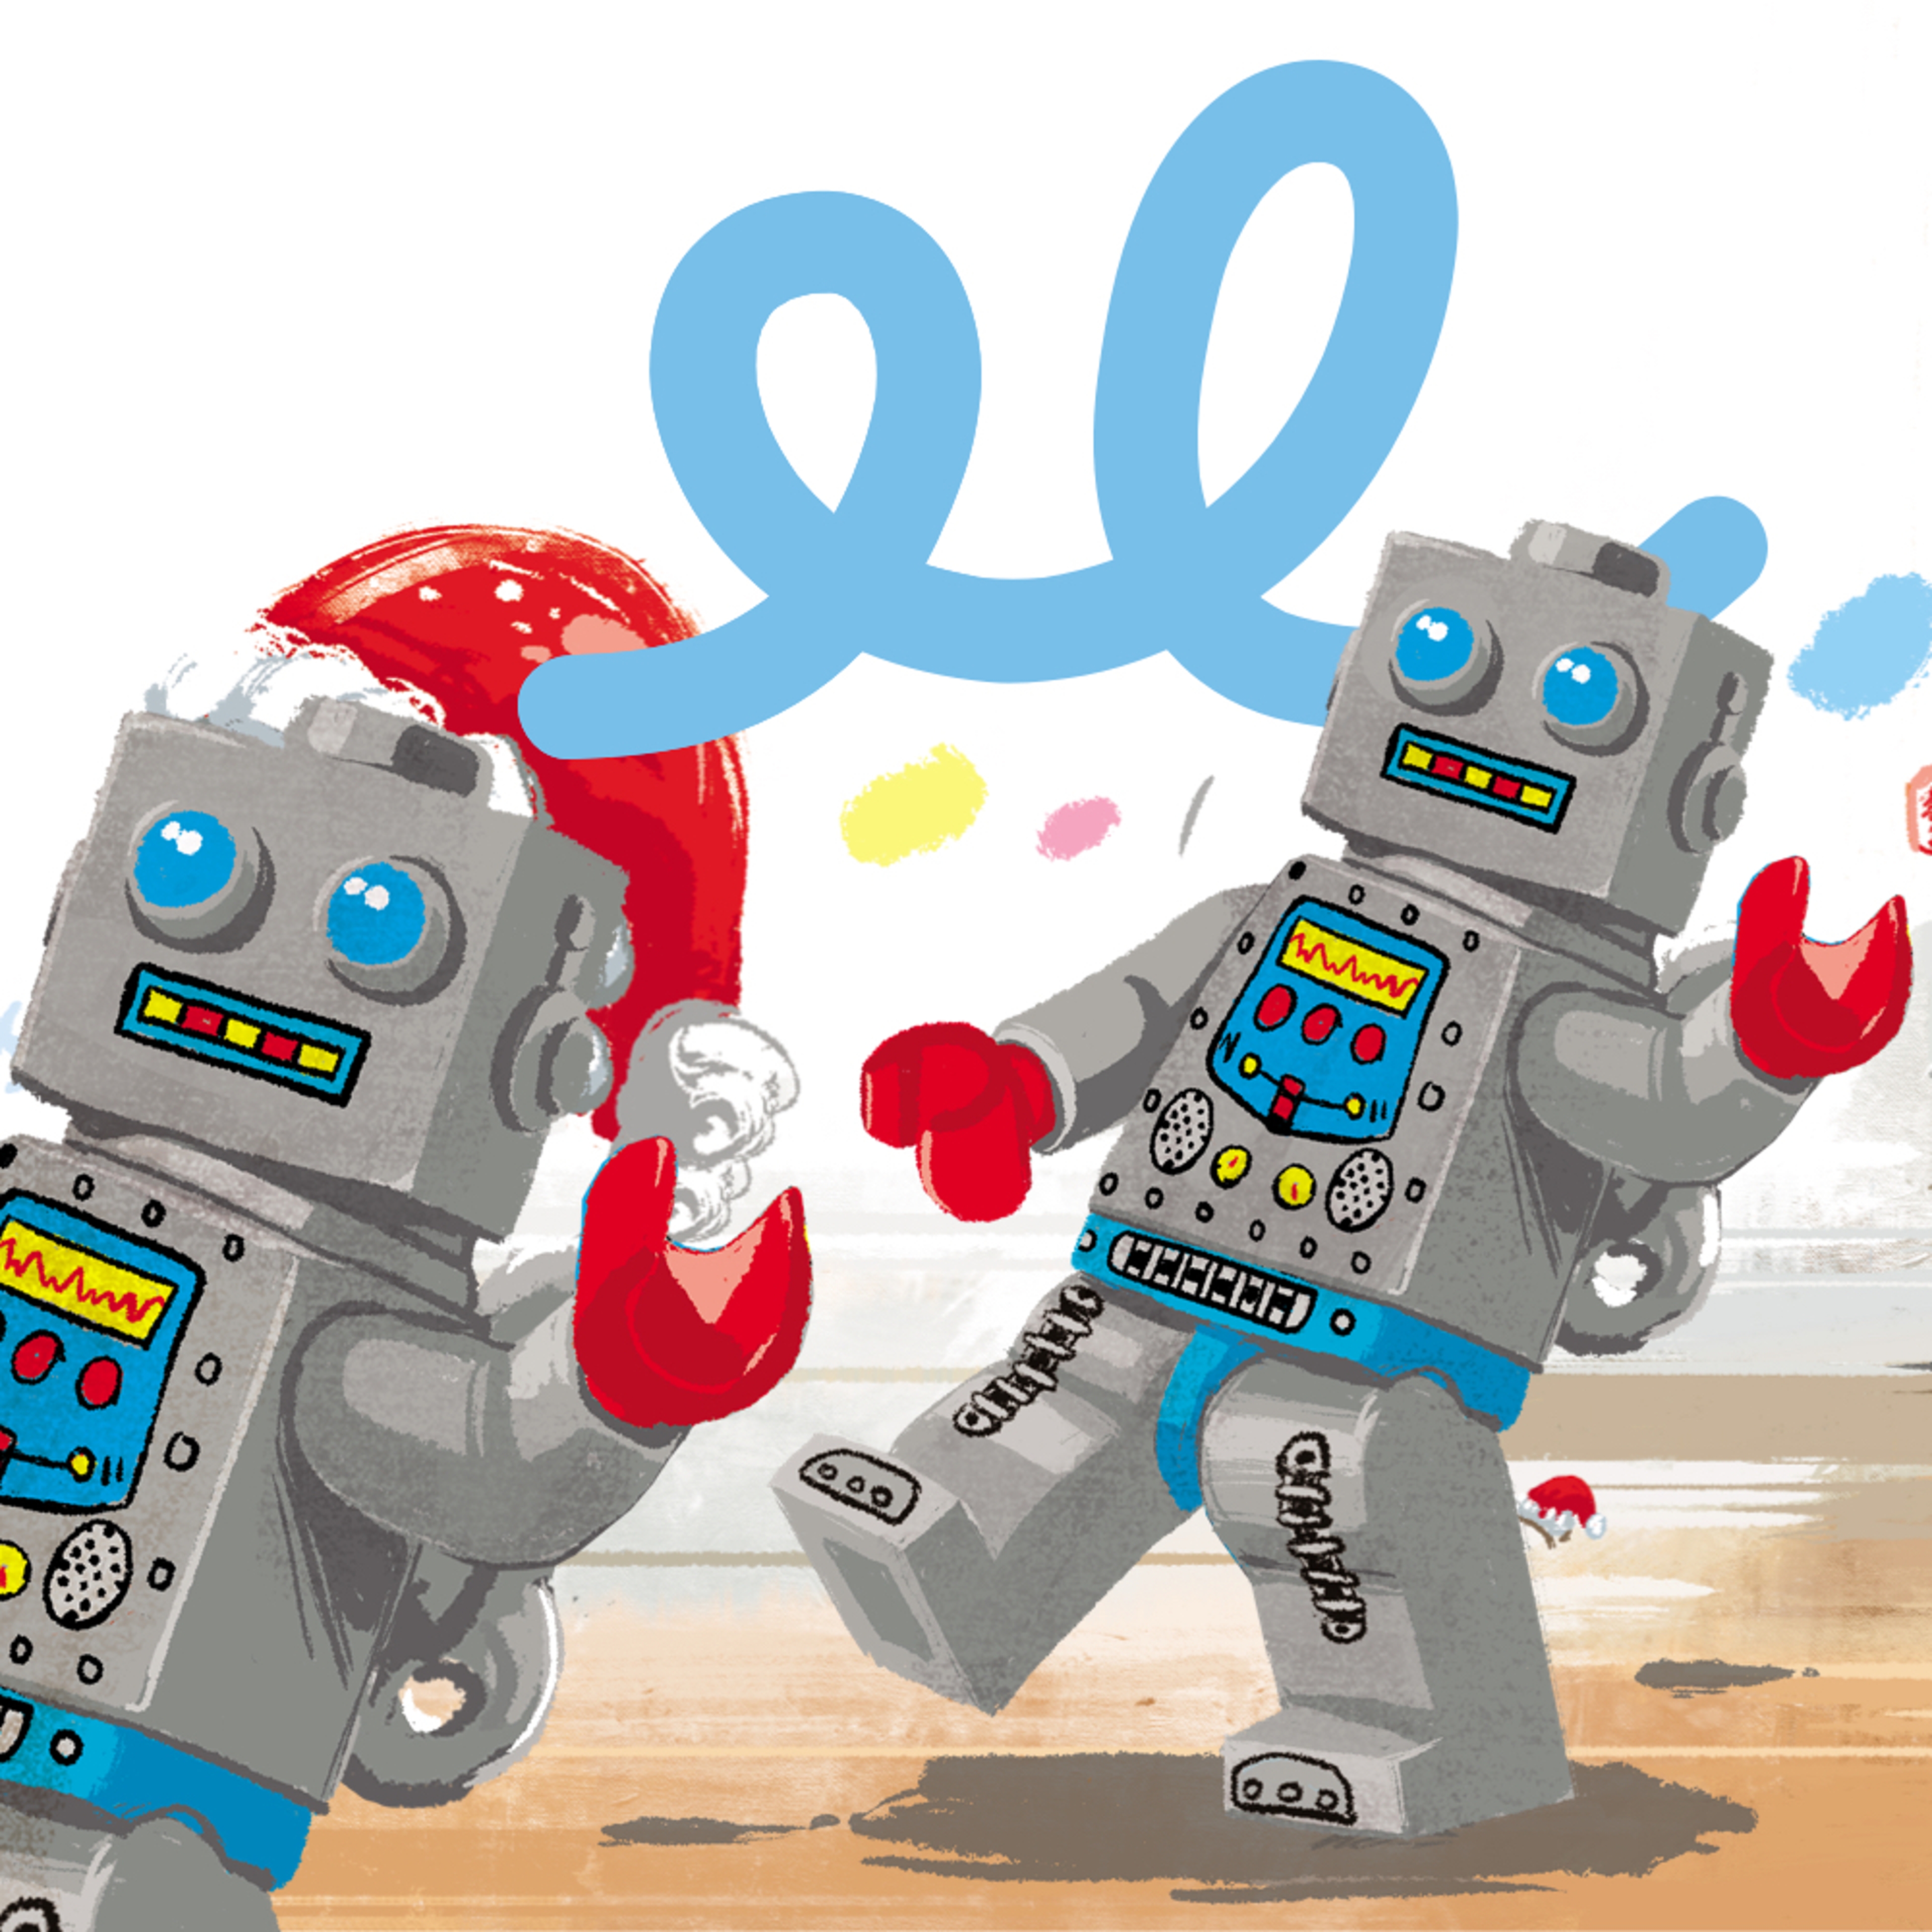 Robot minifigures dancing